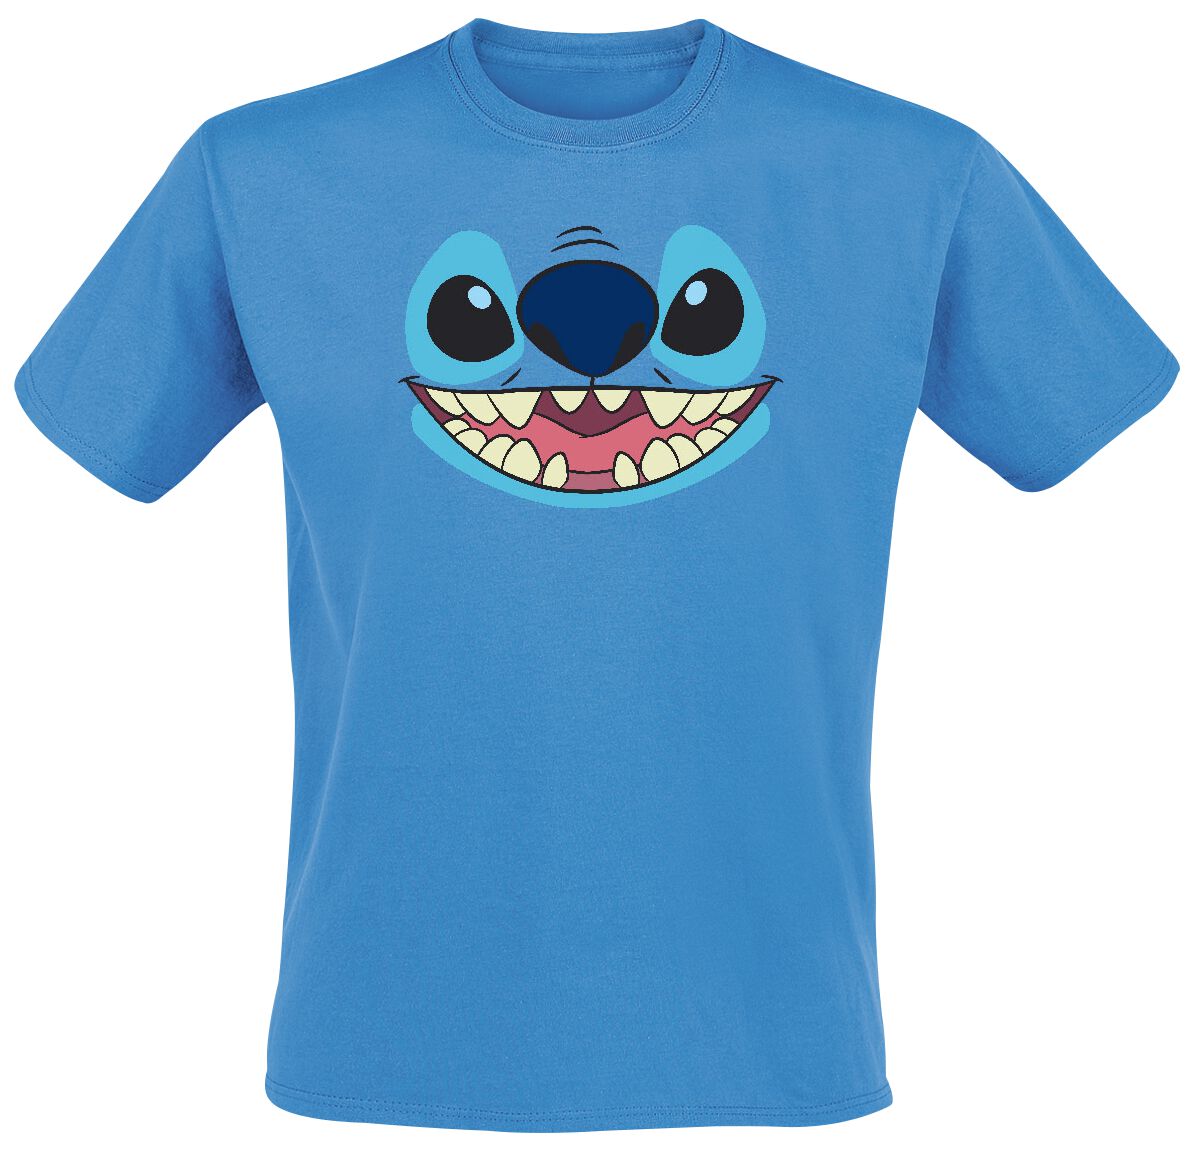 Lilo & Stitch Smile! T-Shirt blue